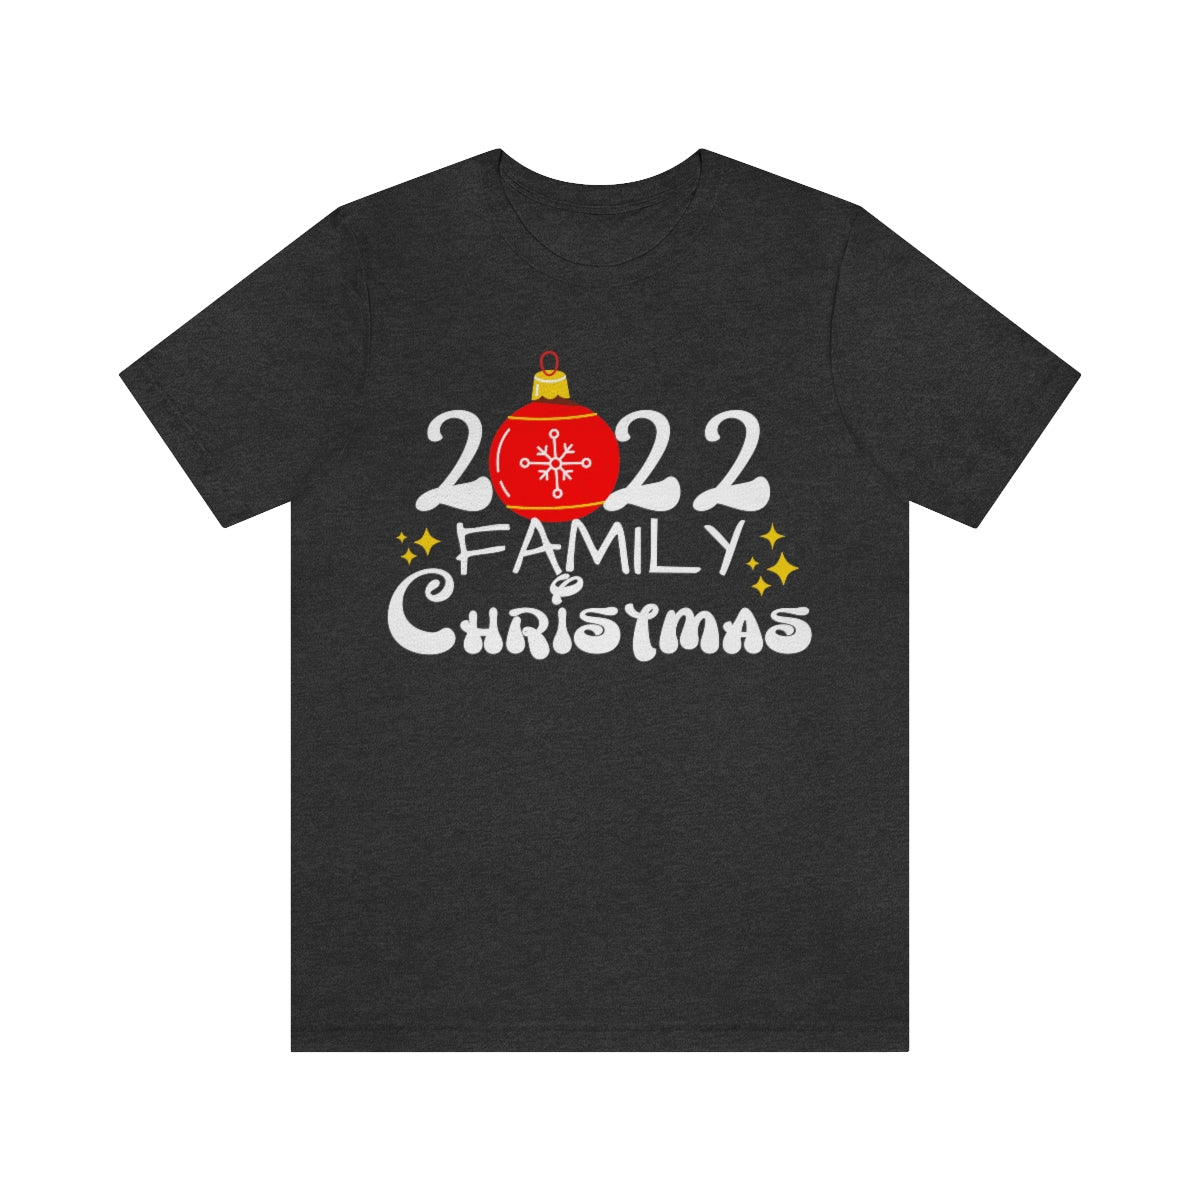 2022 Family Christmas Shirt Trip Inspired